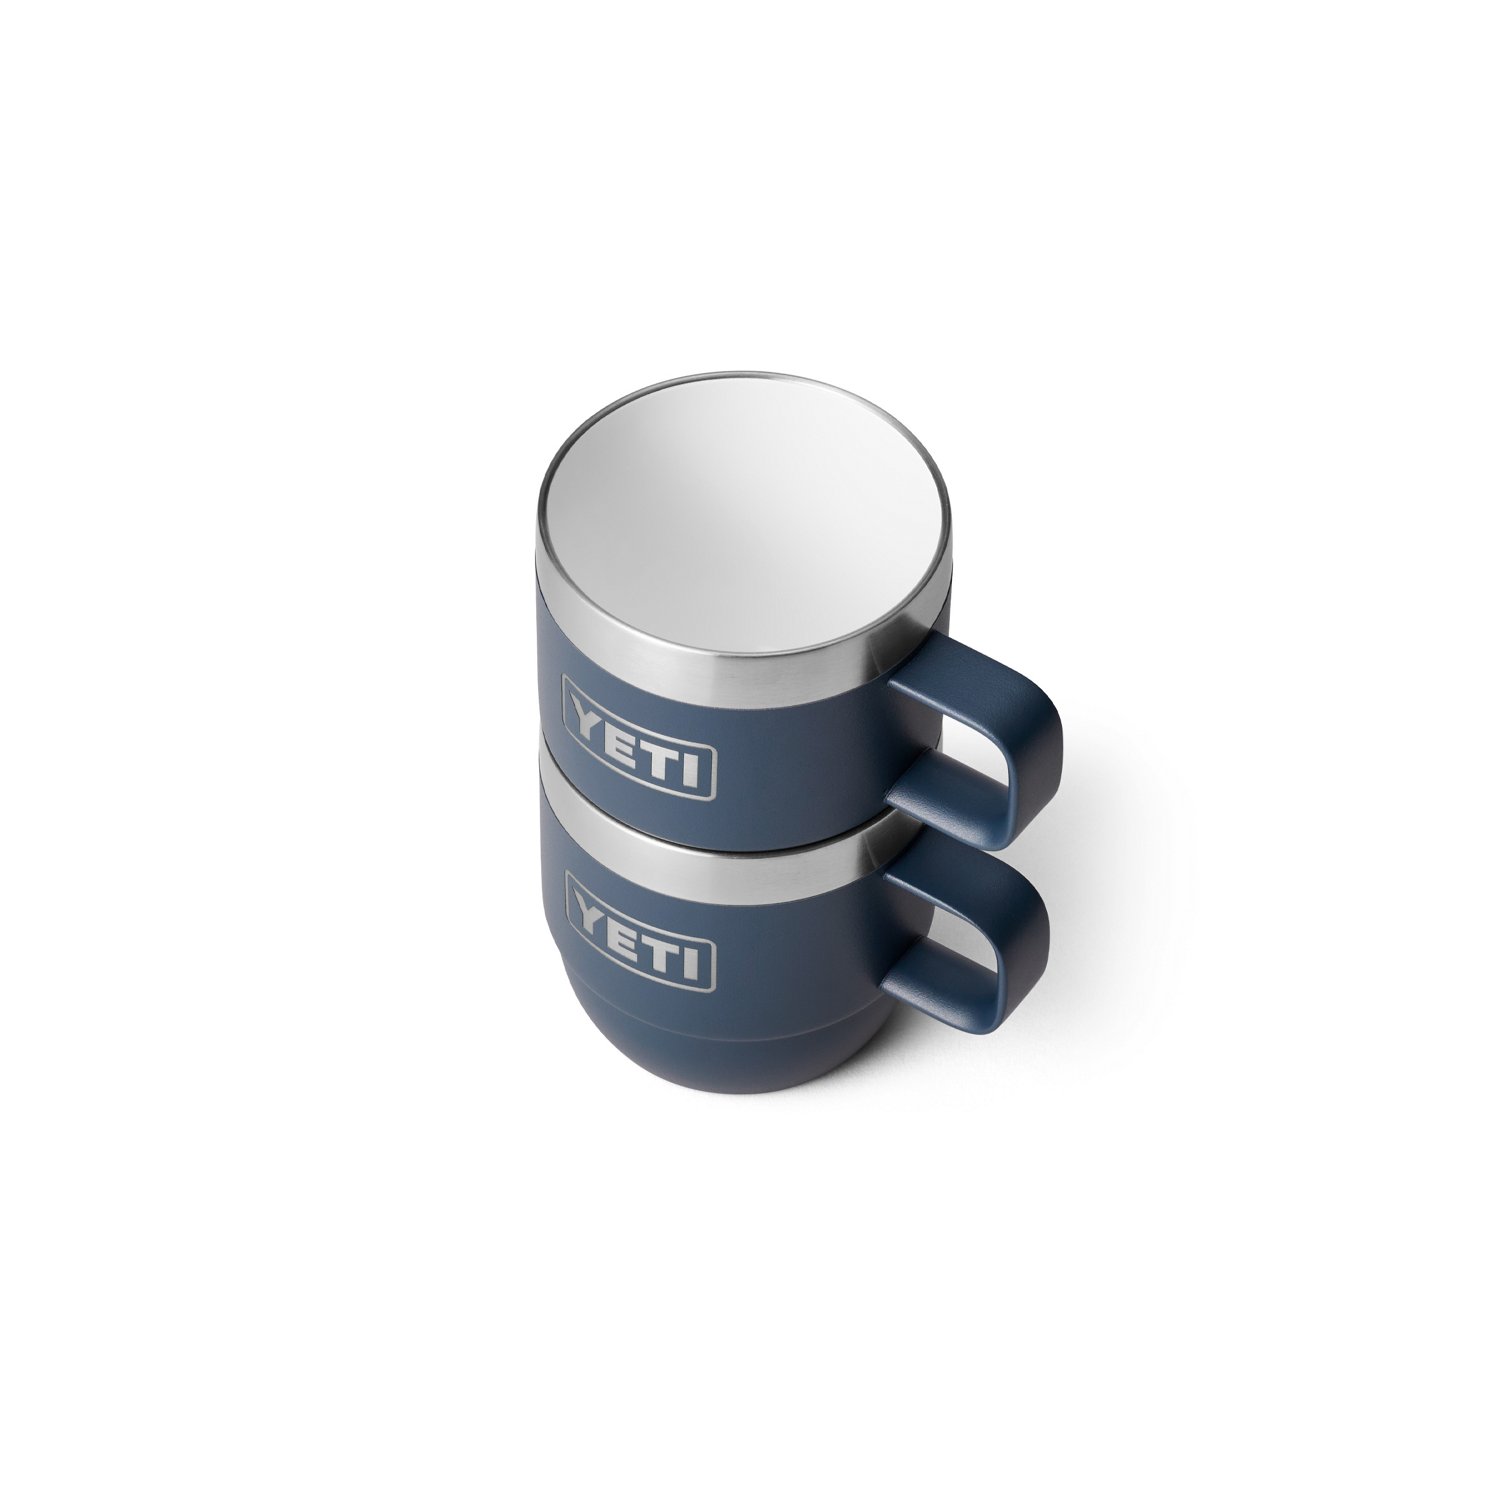 YETI Rambler 6 oz. Espresso Cups Set of 2, Navy – ECS Coffee